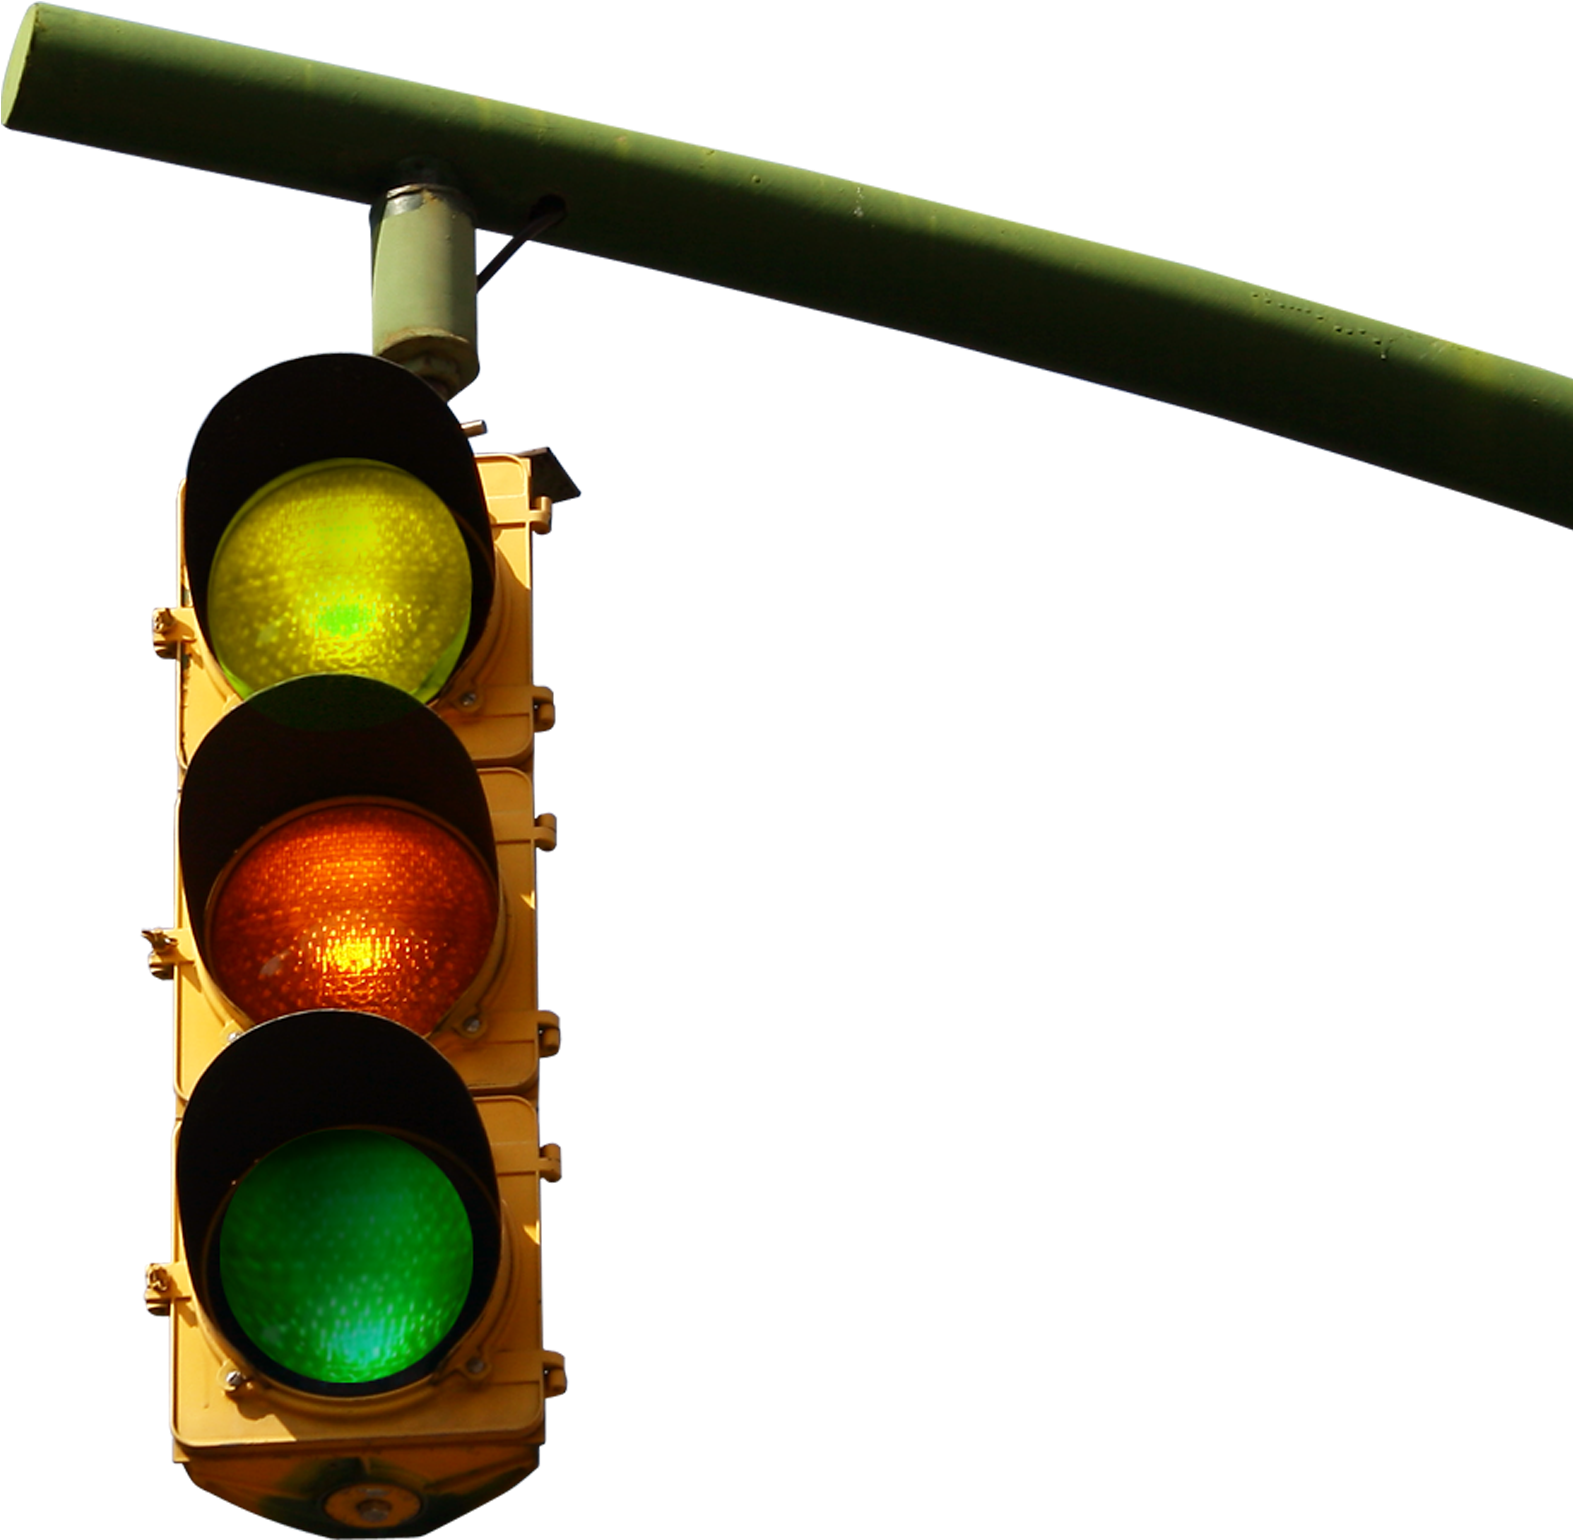 A Traffic Light With Green Light